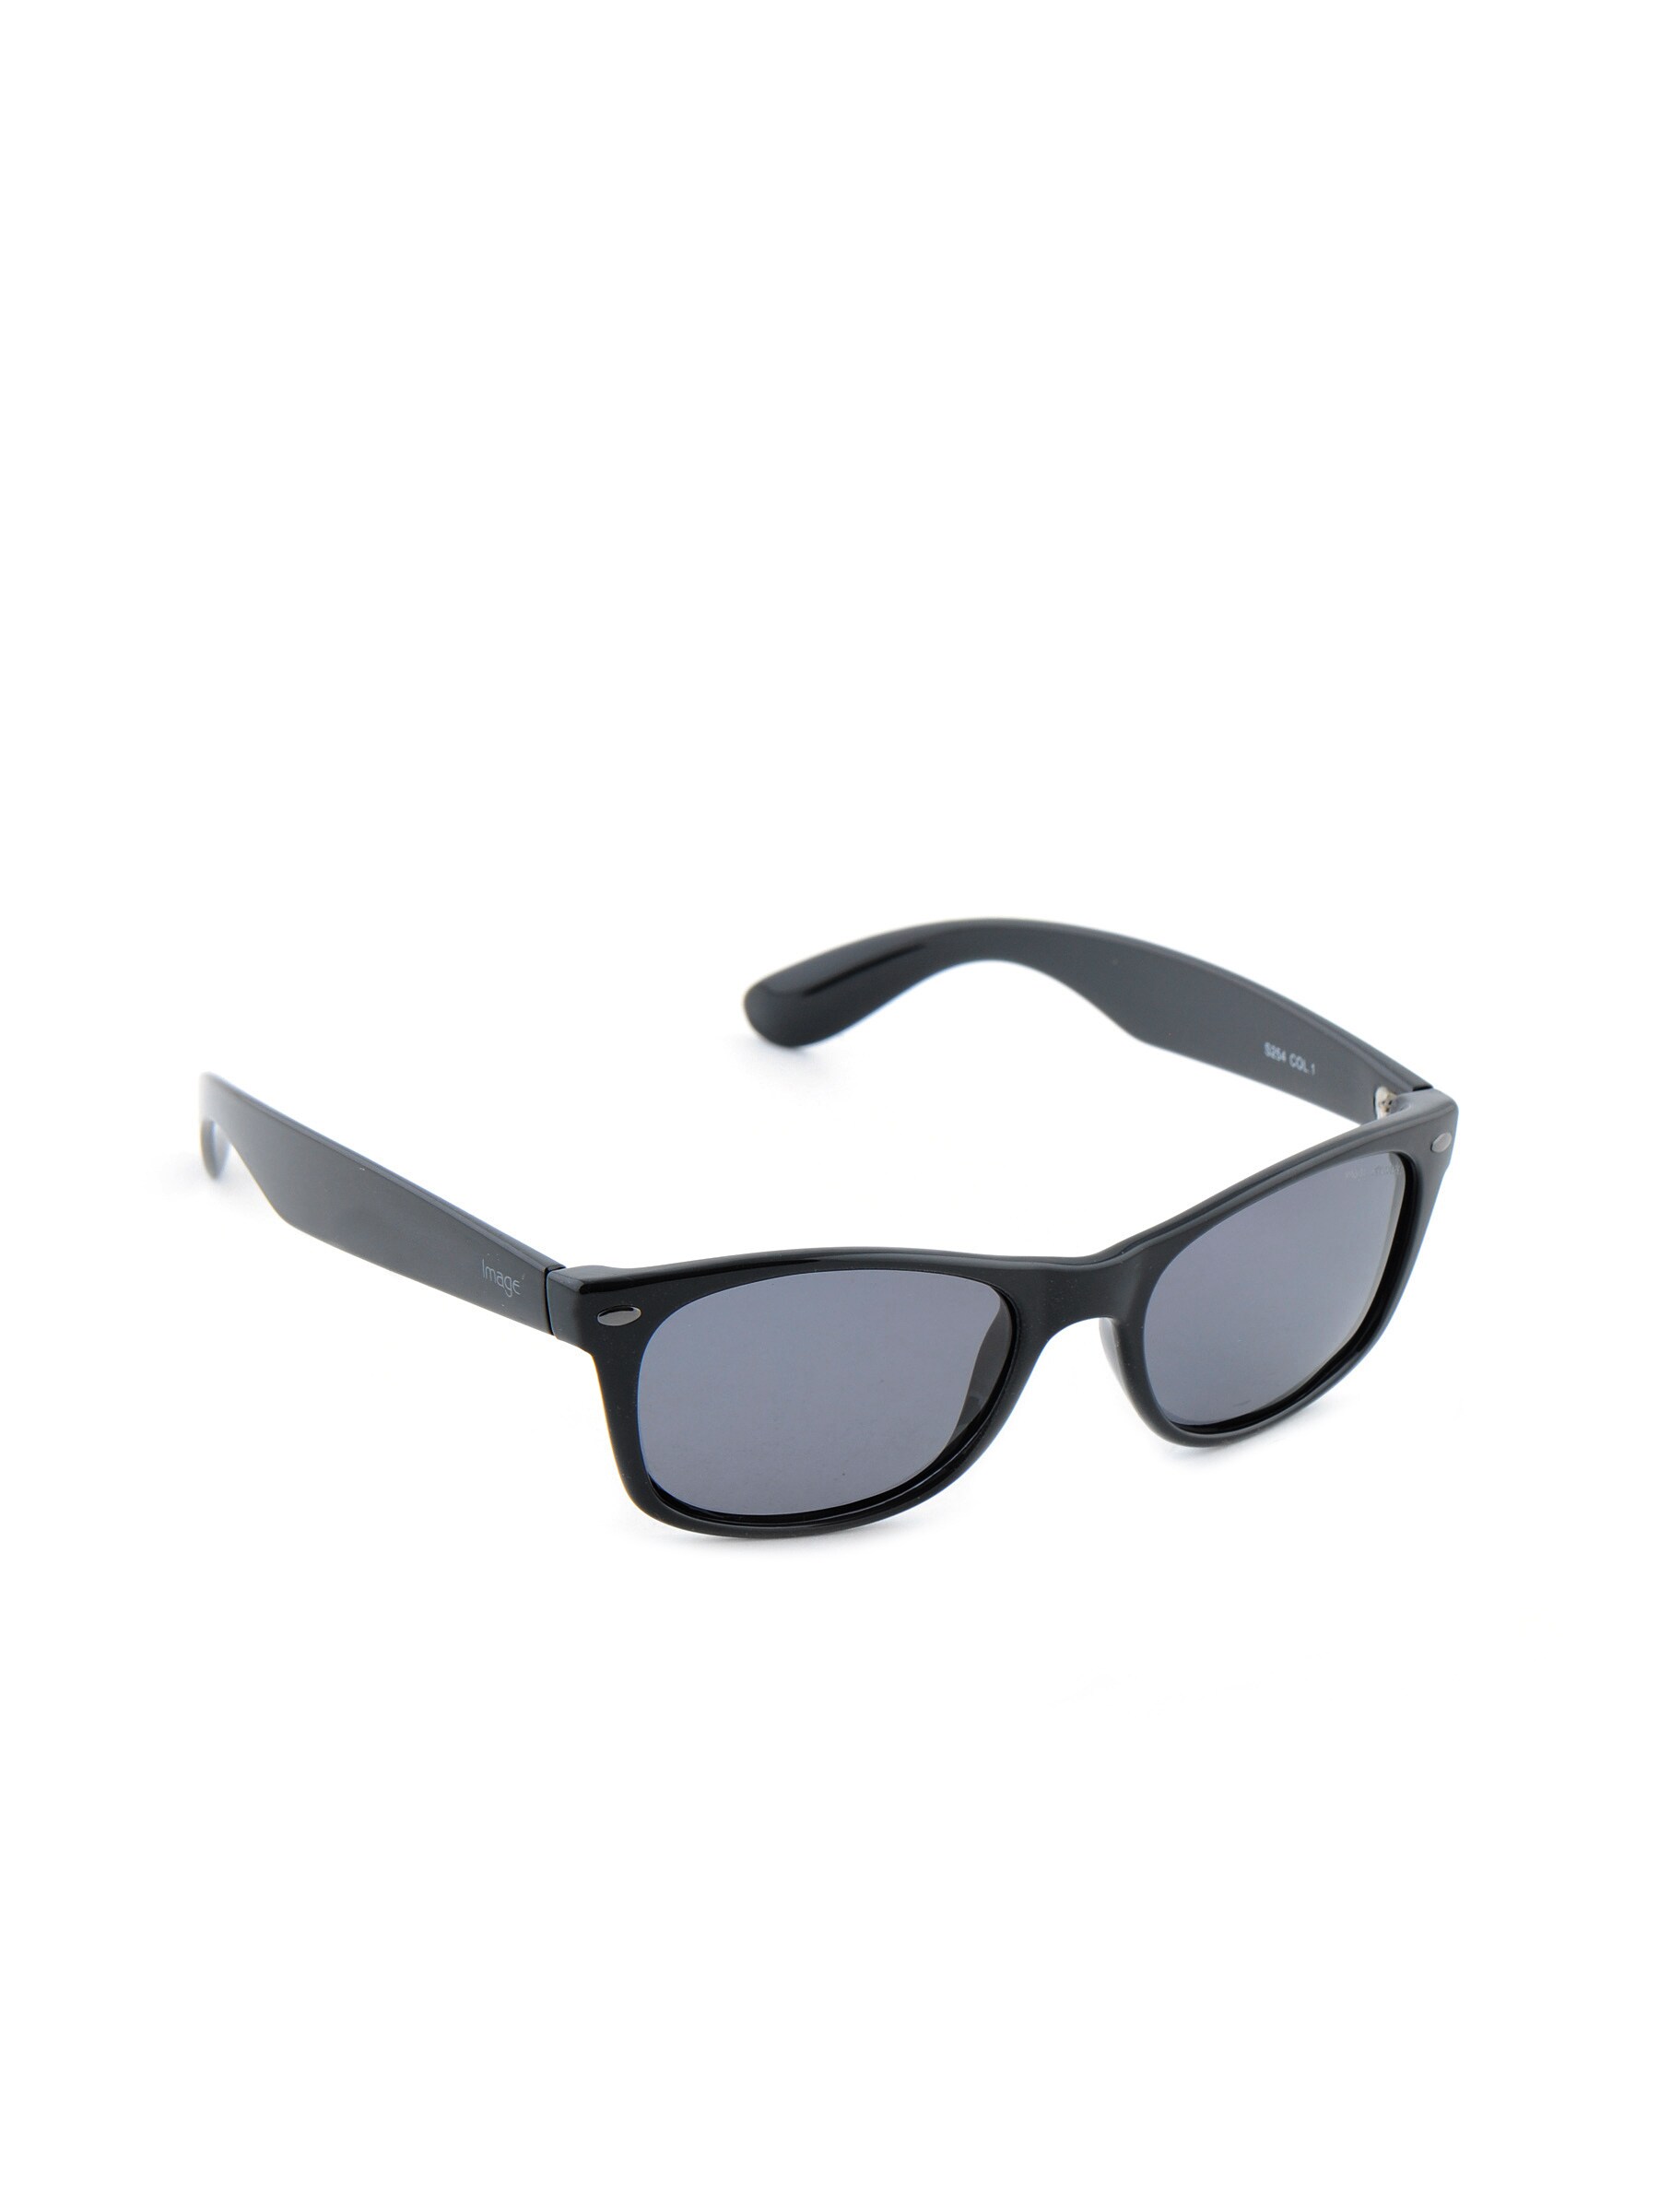 Image Men Classic Eyewear Black Sunglasses